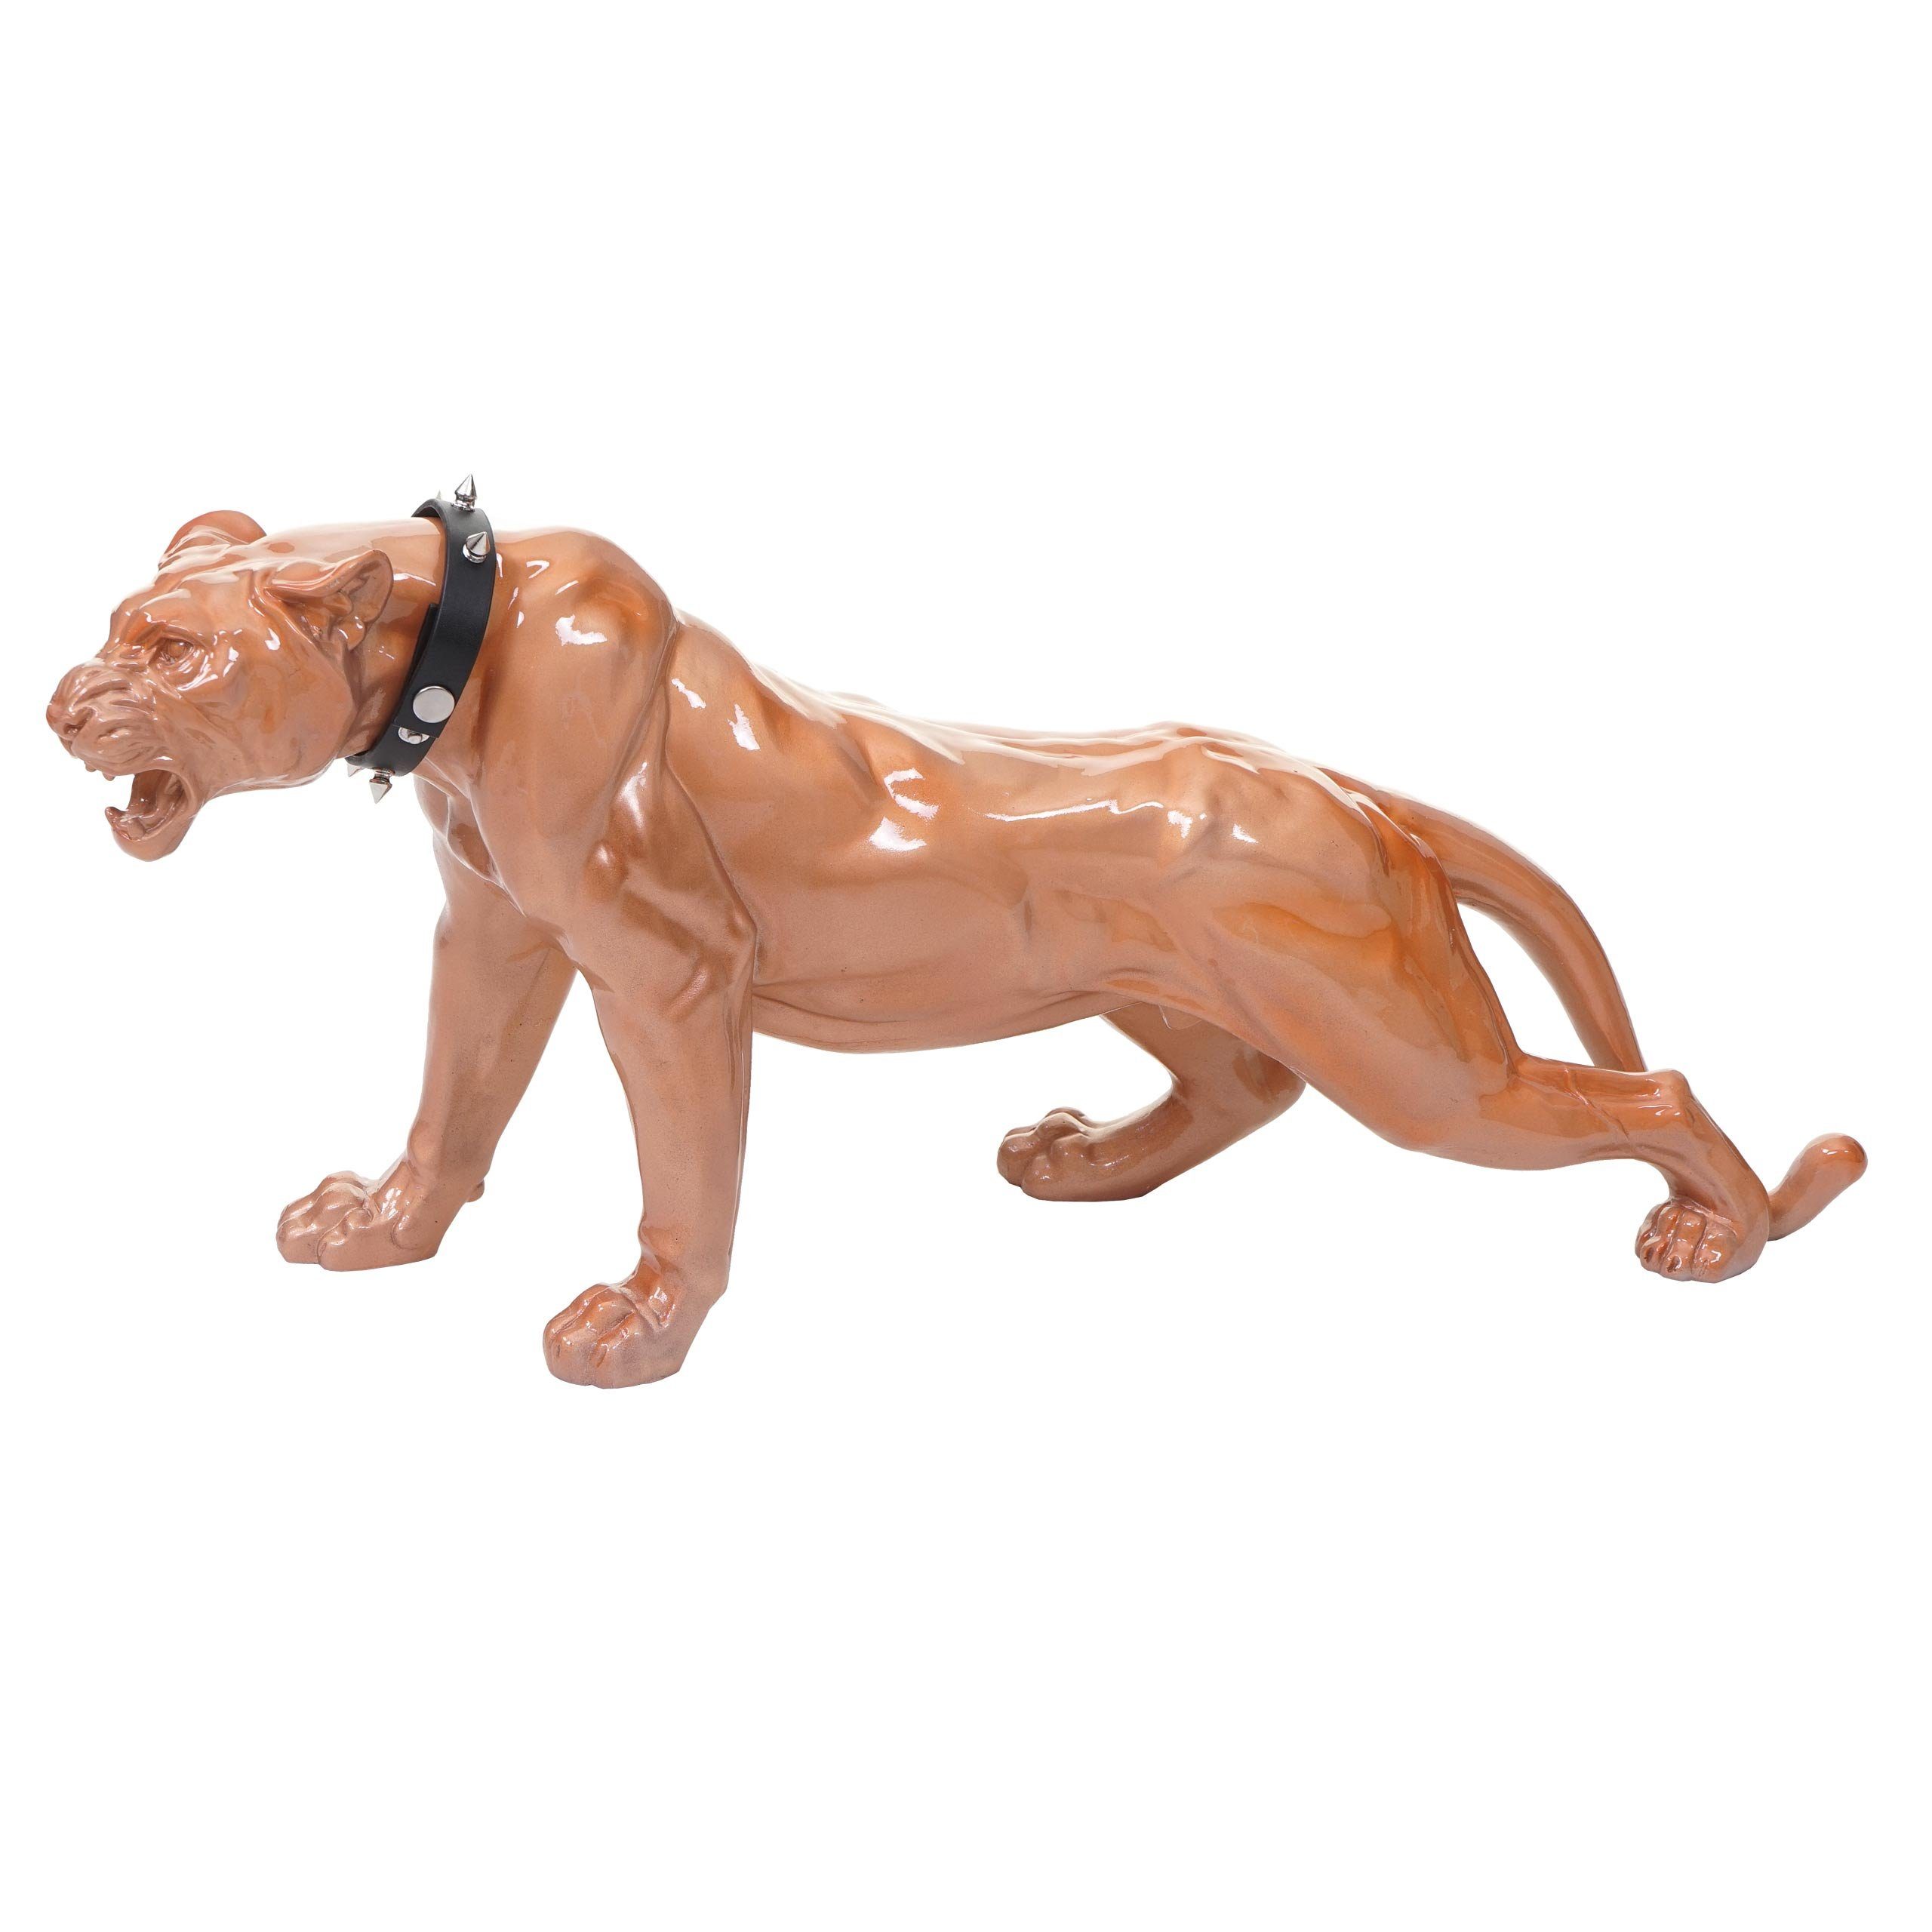 MCW Tierfigur Panther, Indoor/Outdoor-geeignet, Witterungsbeständig, Frostbeständig bis -10° C, Inkl. Halsband antik